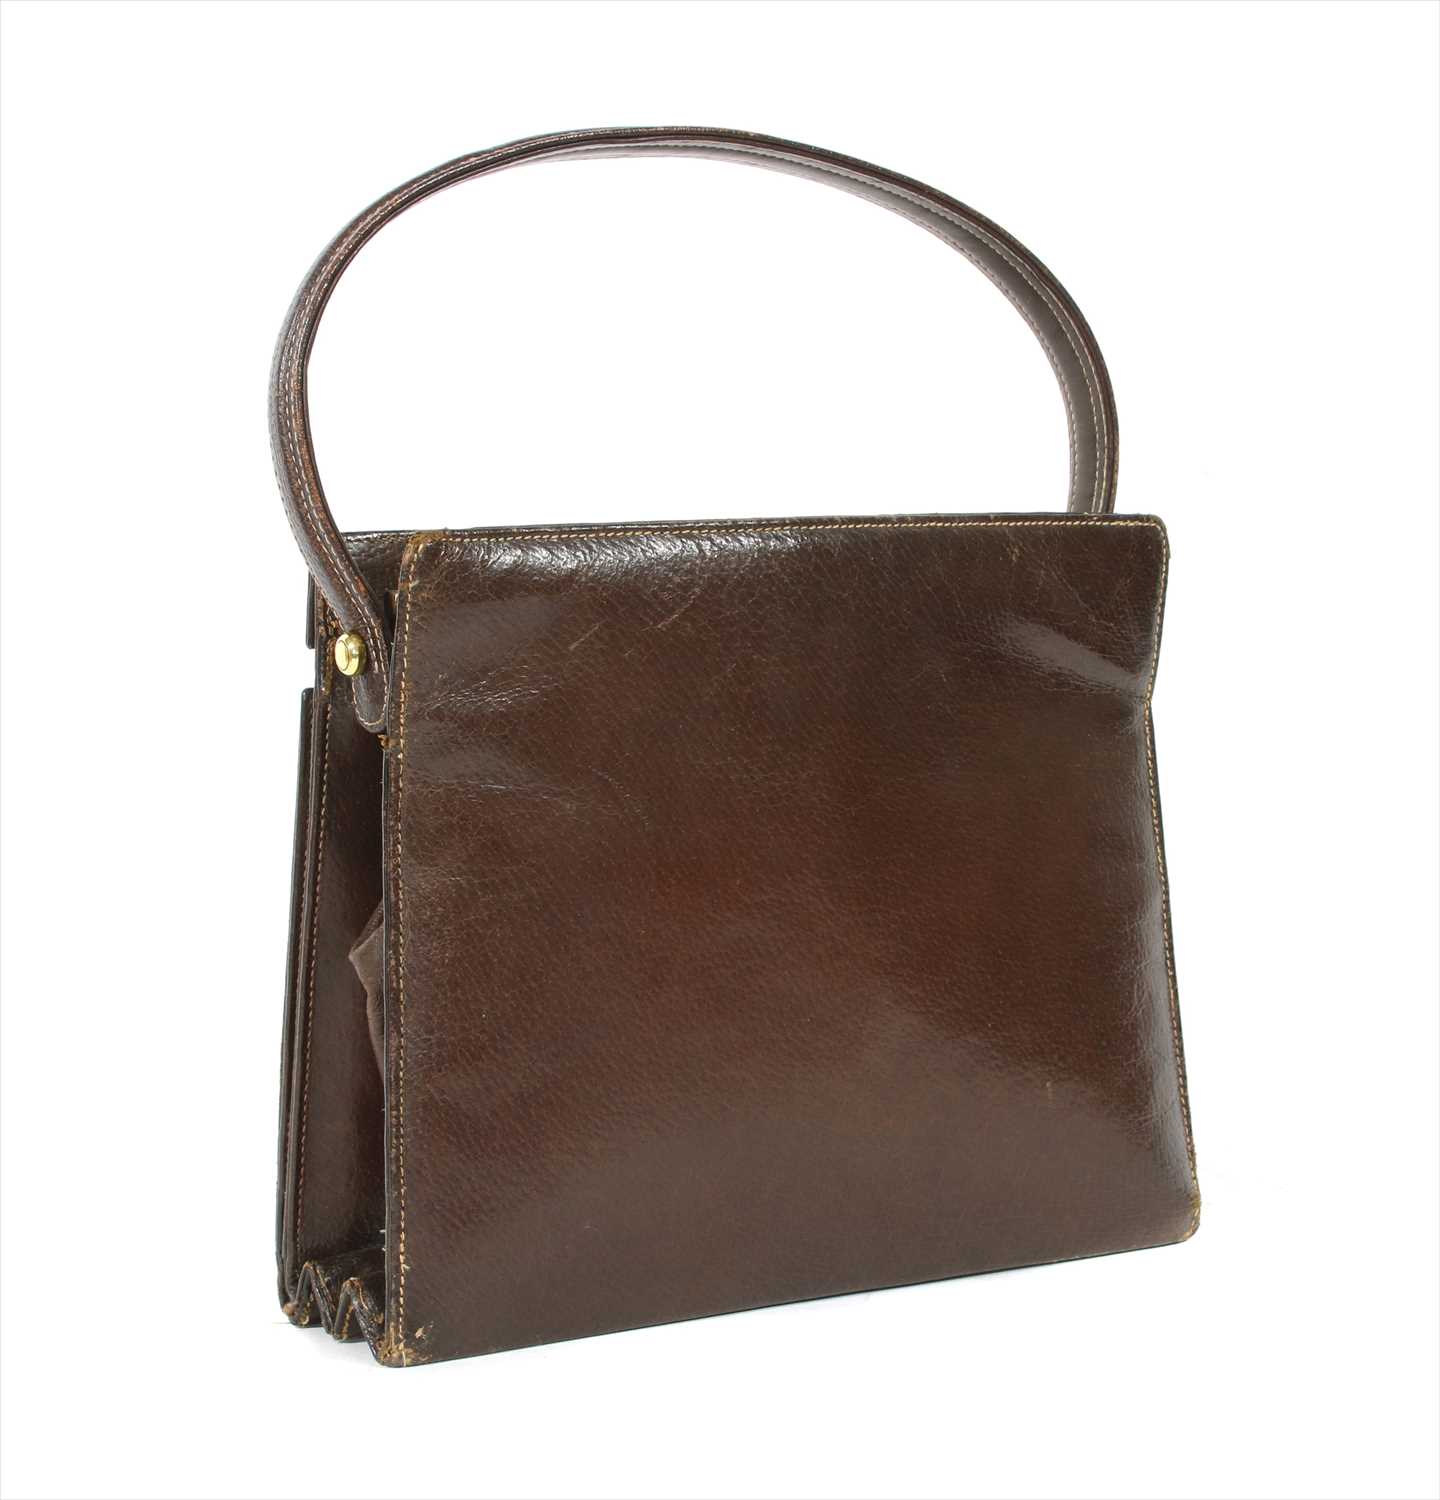 A vintage Gucci leather writing travel handbag